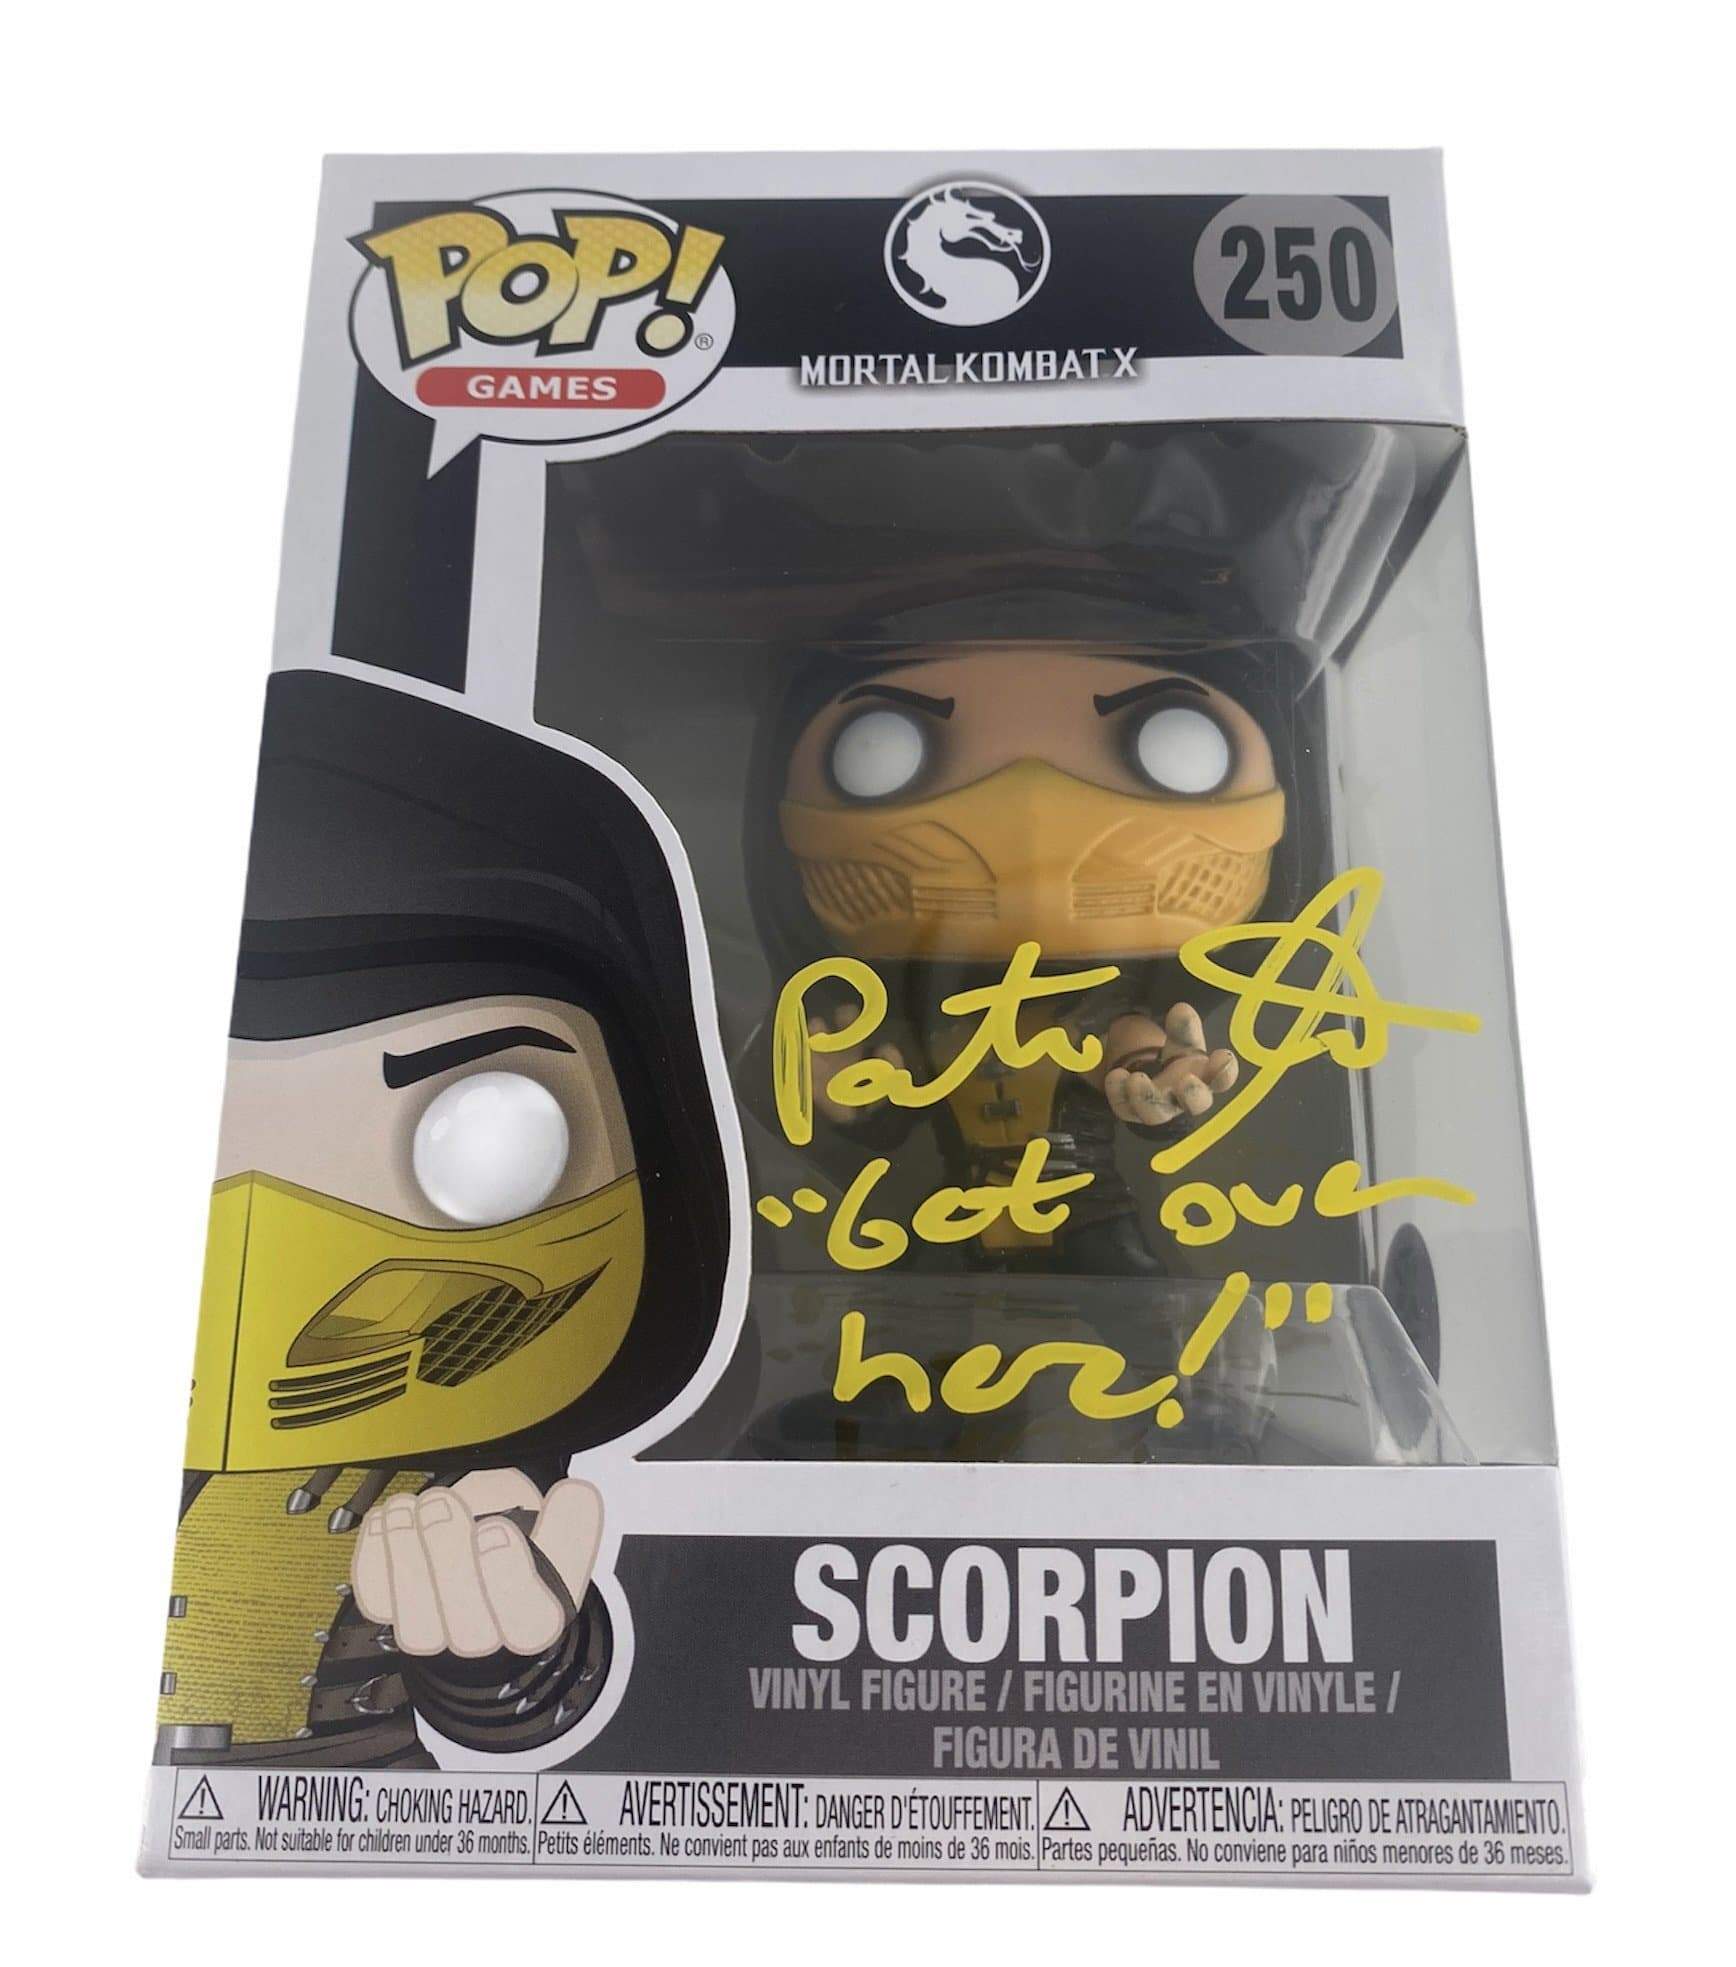 Scorpion Mortal Kombat X signed Funko Pop Vinyl - Pop Figures